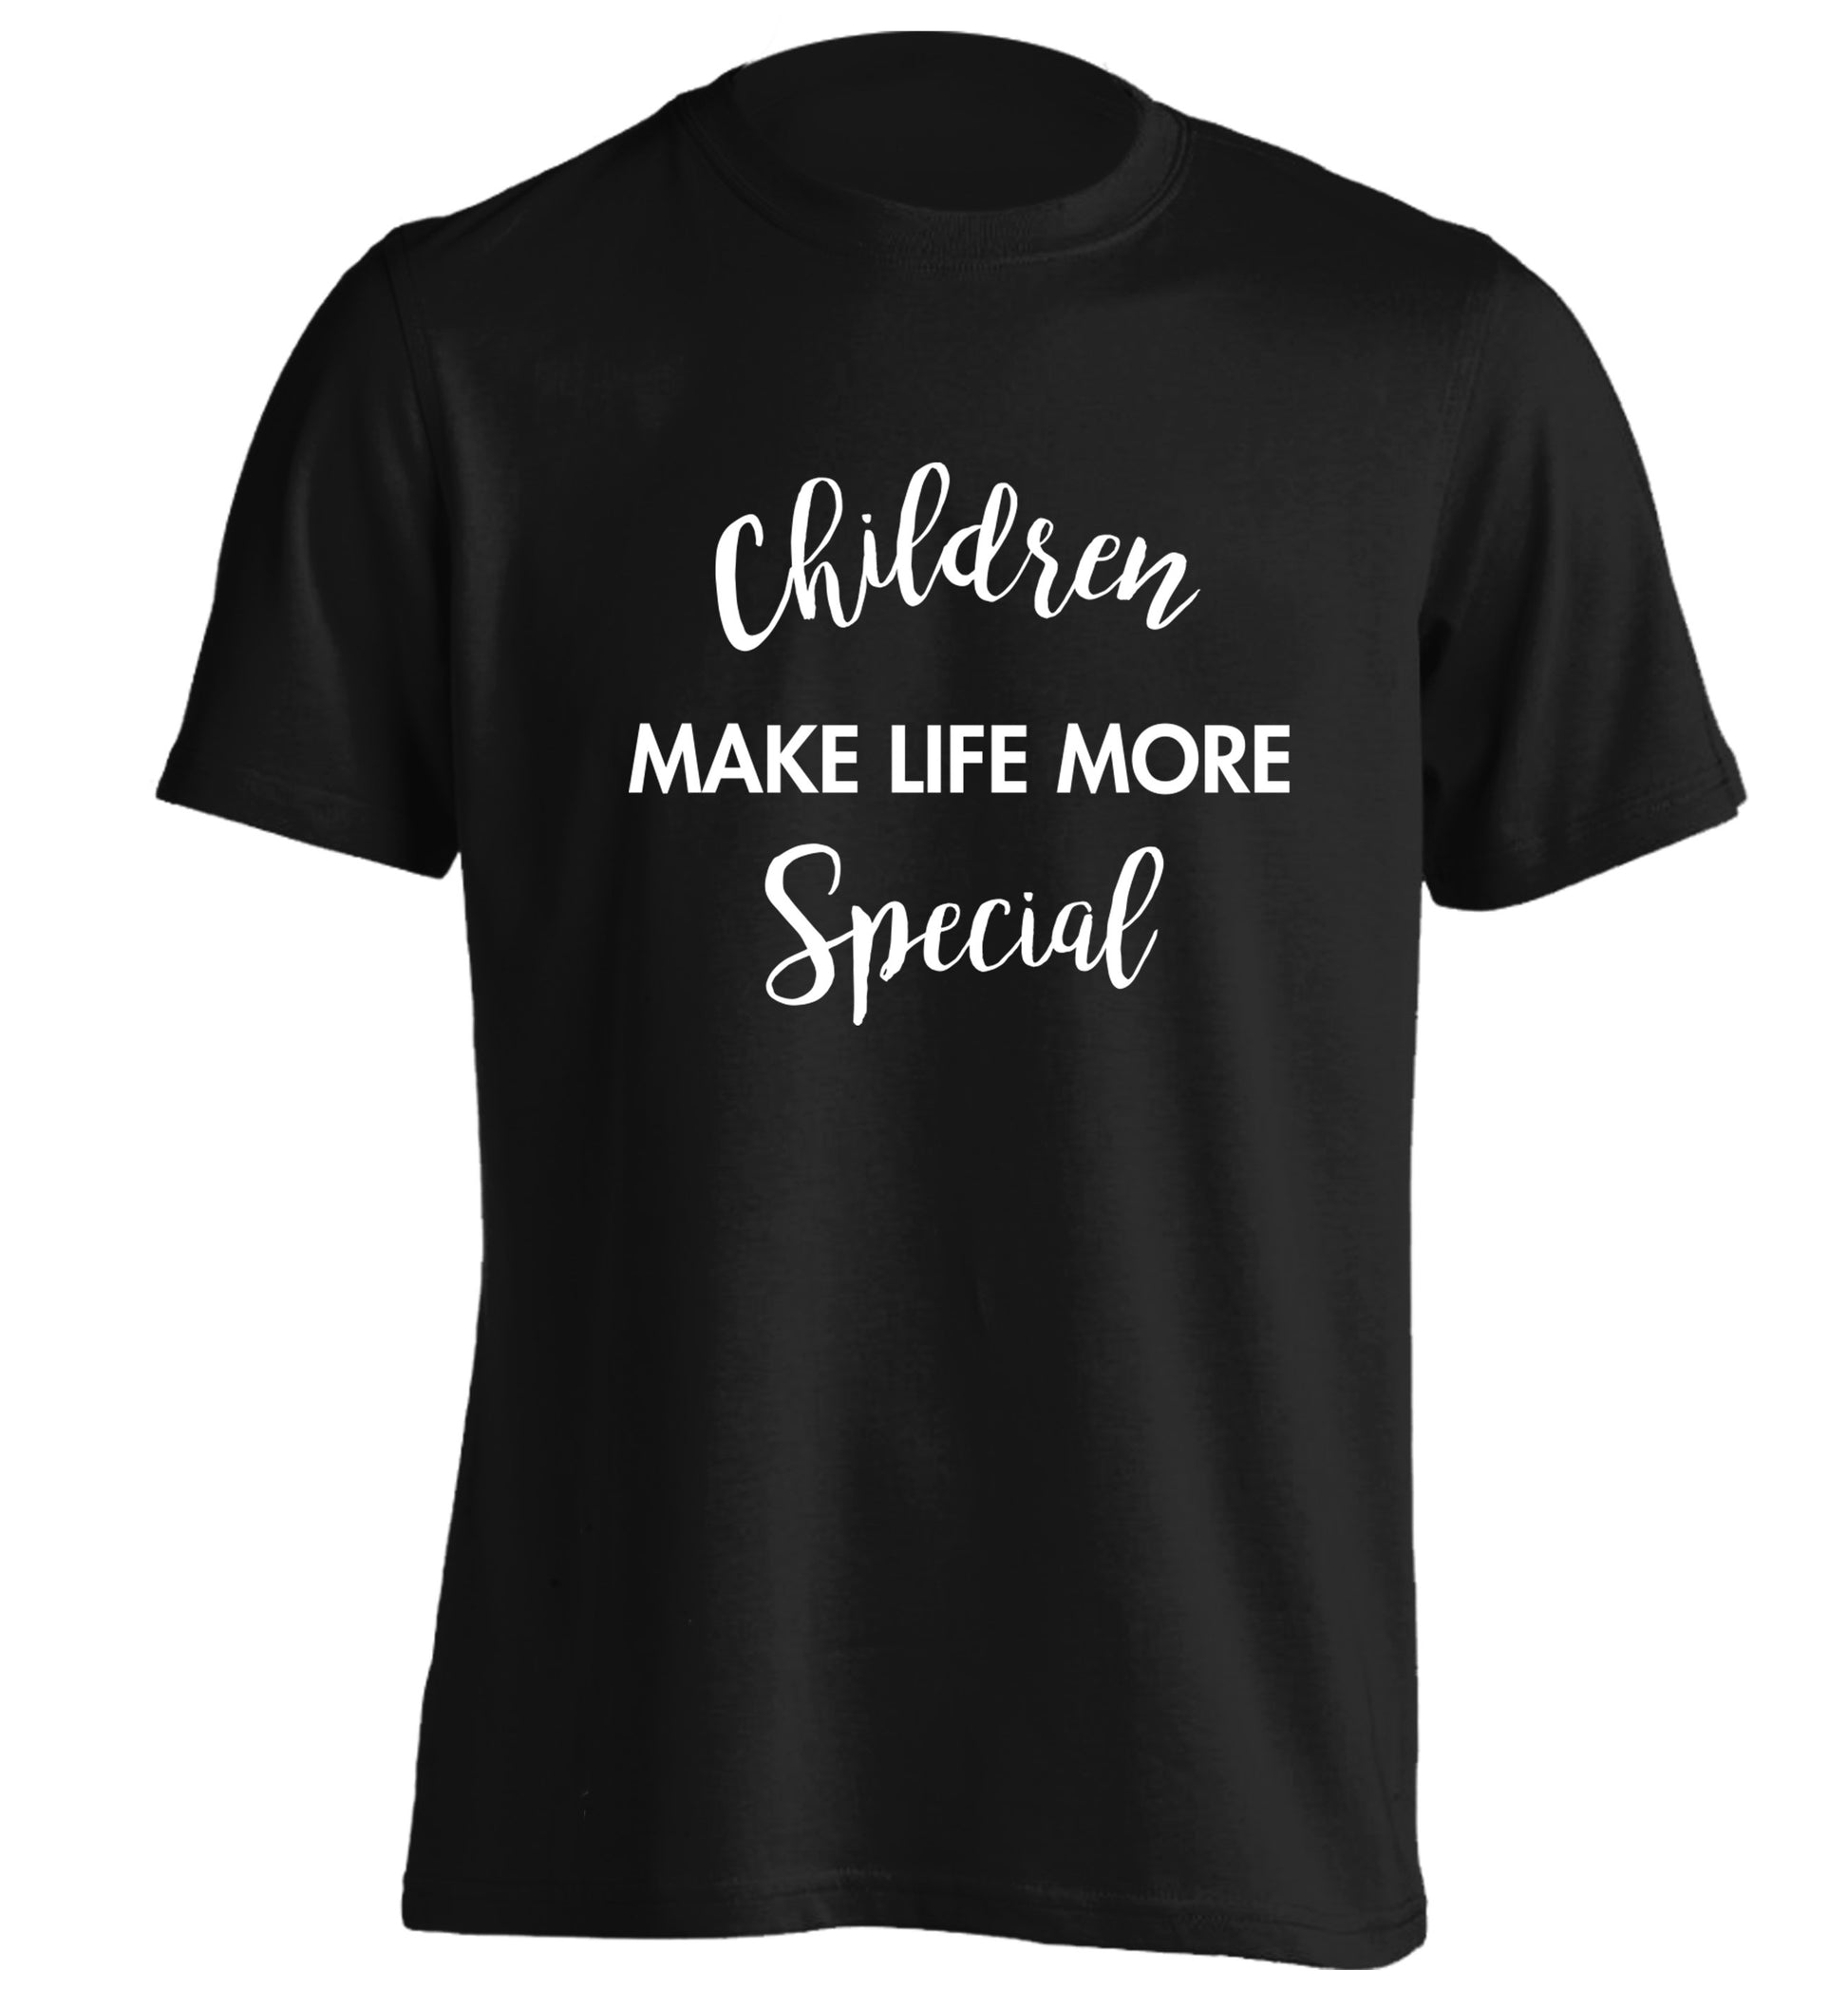 Children make life more special adults unisex black Tshirt 2XL